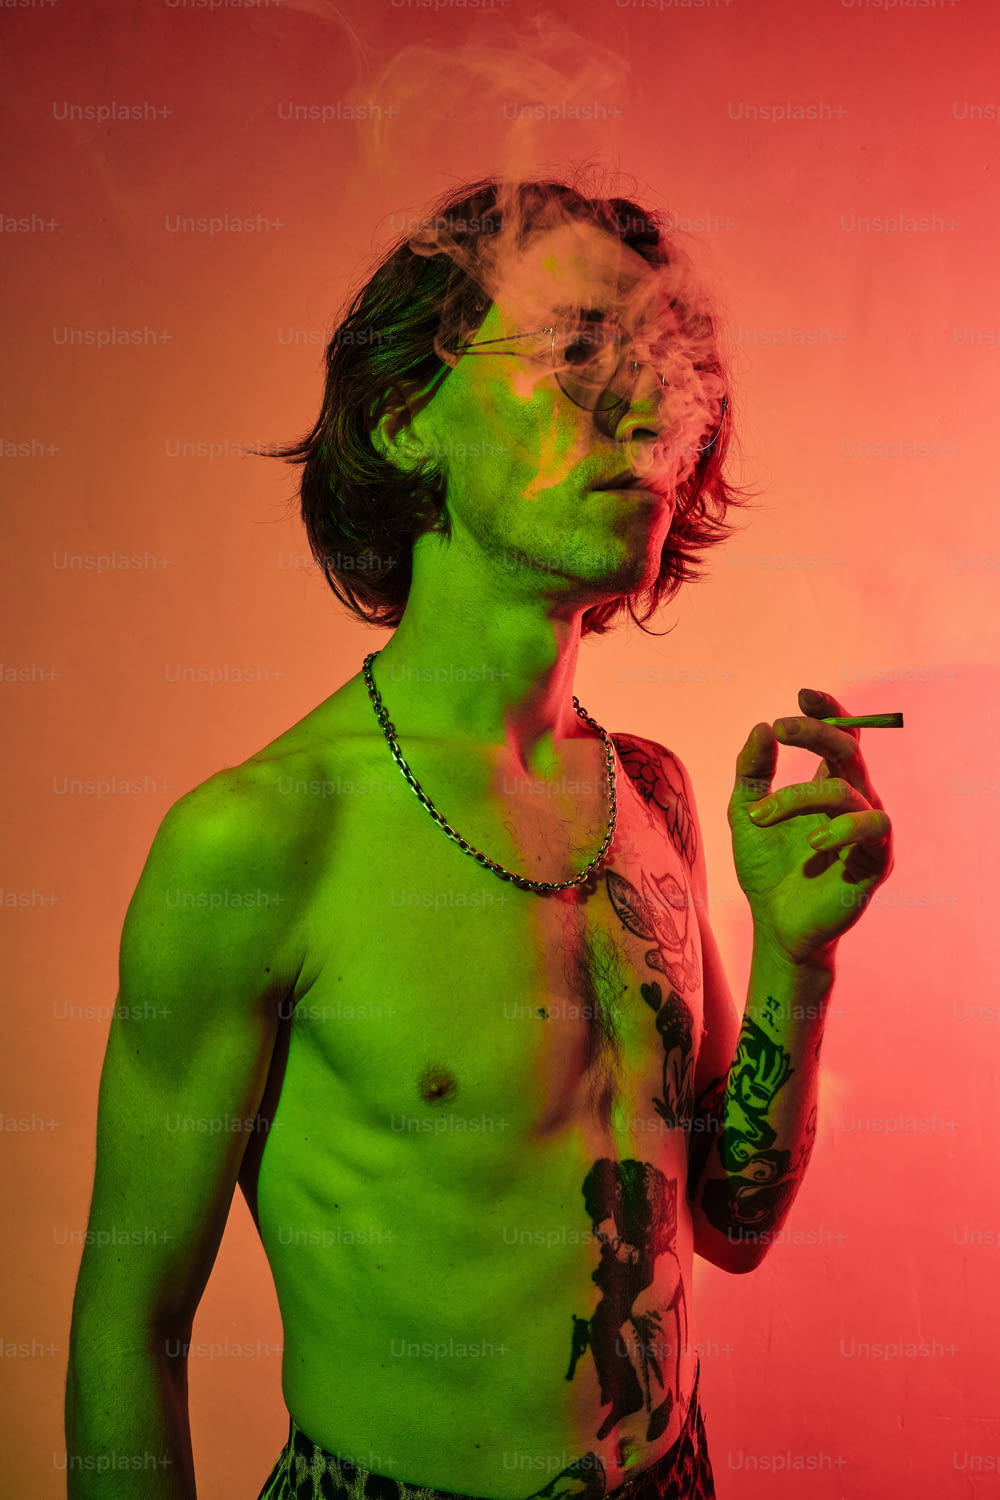 a man smoking a cigarette in a green shirt